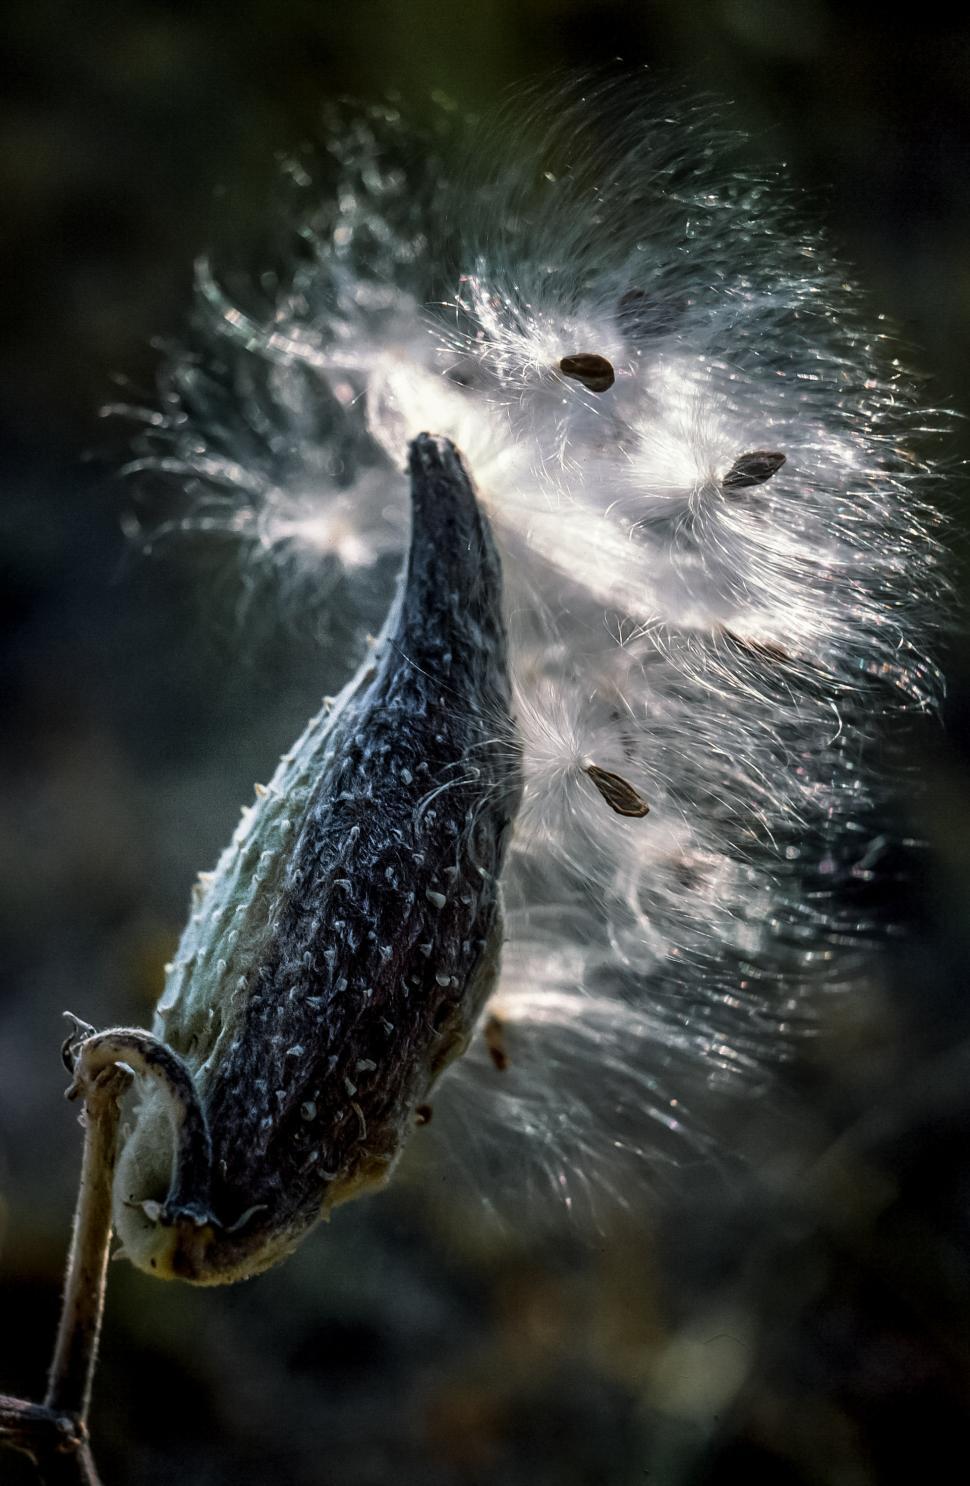 Free Image of Seeds bursting from milkweed pods 